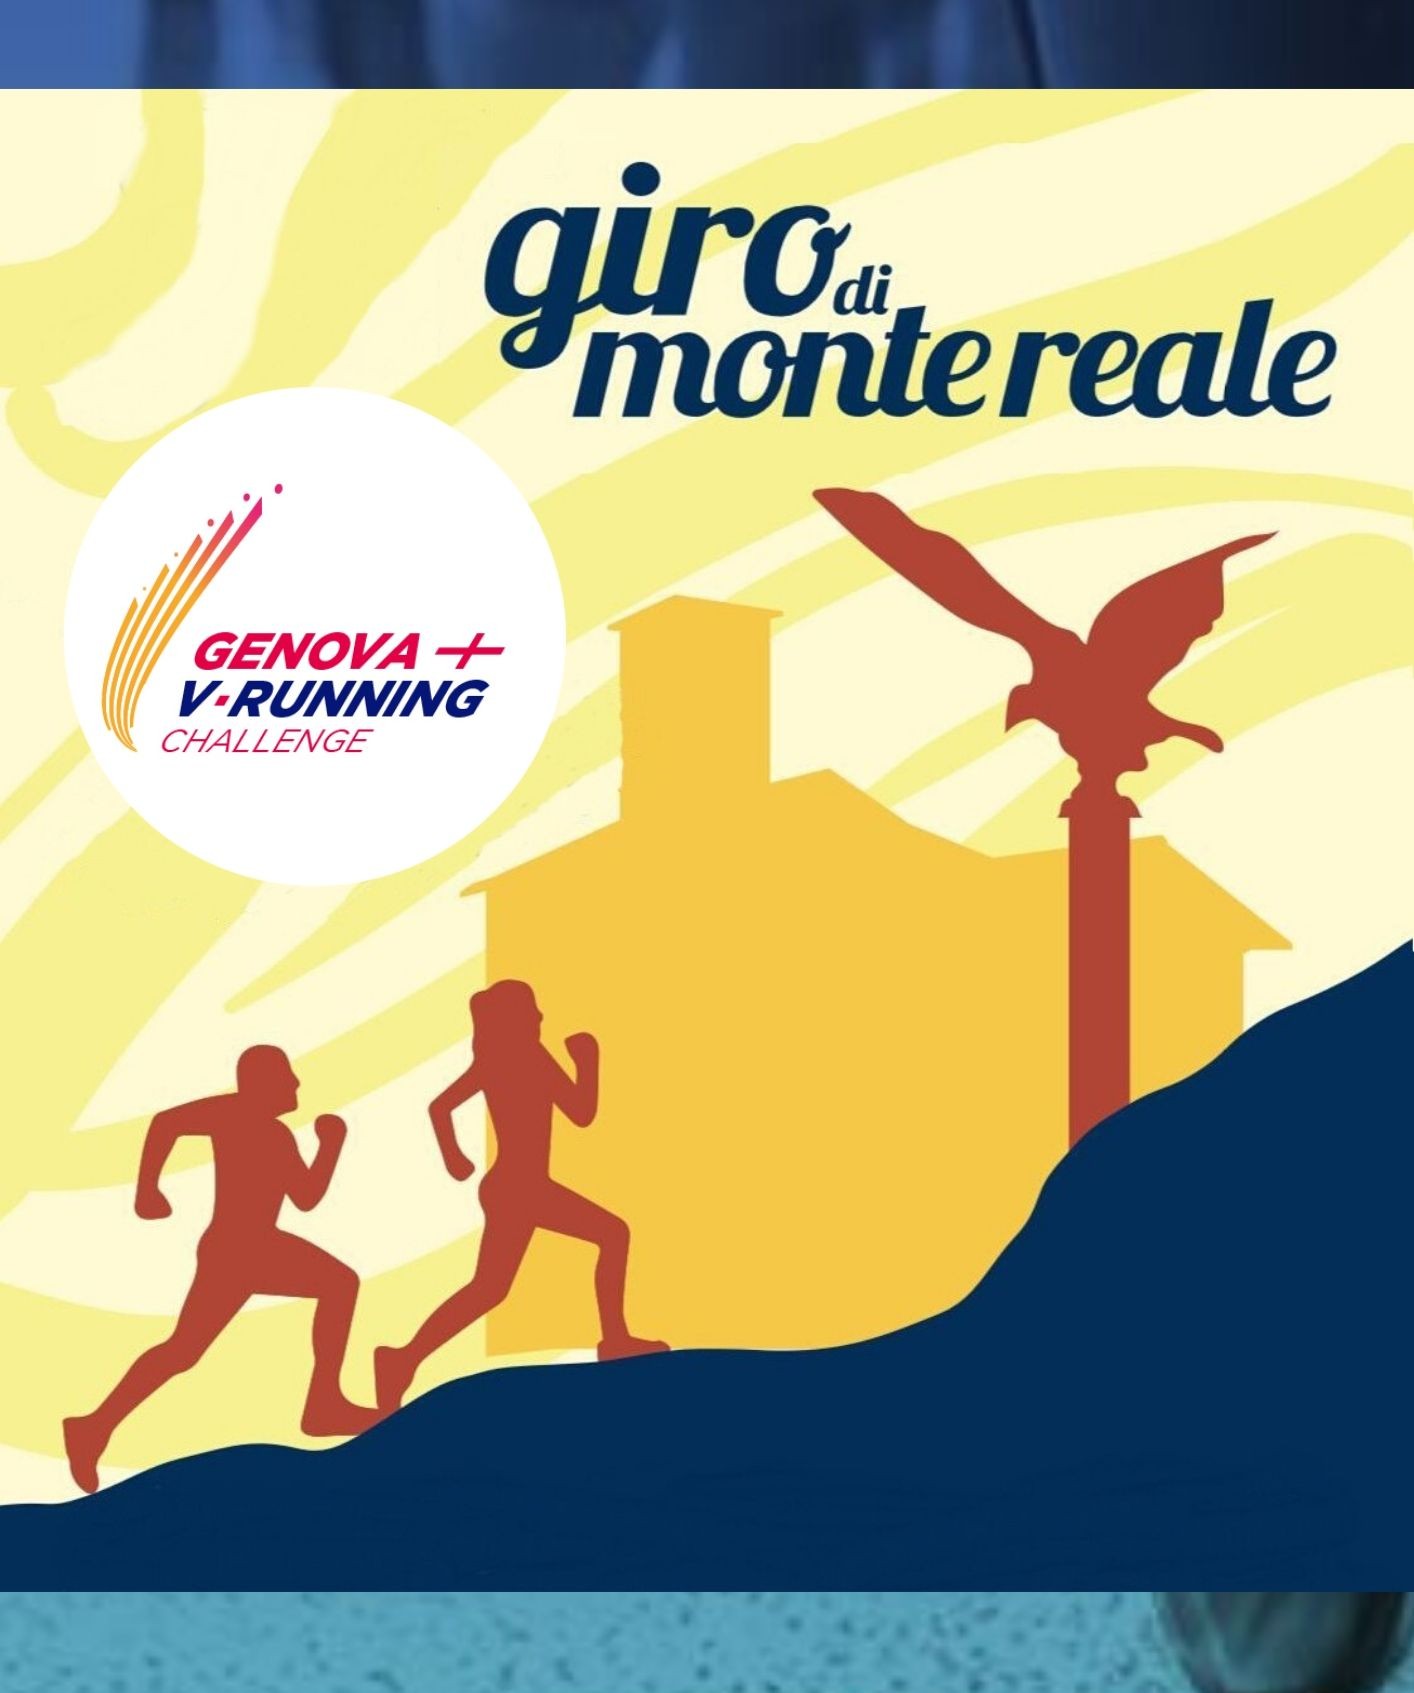 Volantino GIRO DI MONTE REALE VIRTUAL RUN 2020 - GENOVA V-RUNNING CHALLENGE